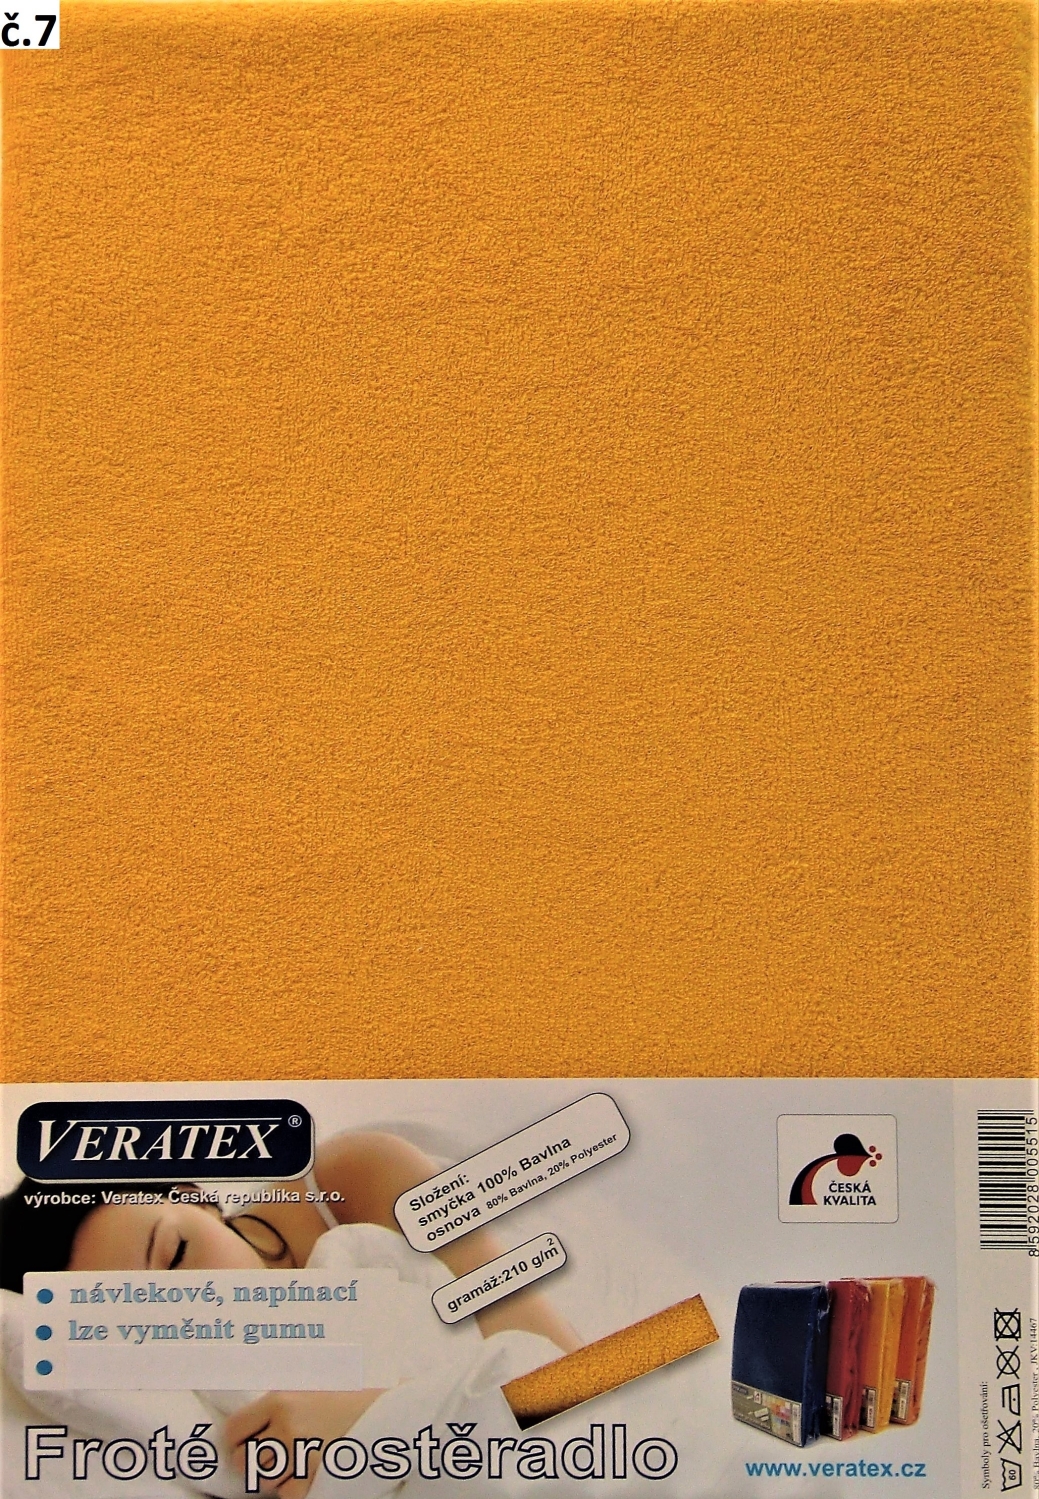 Veratex Froté prostěradlo postýlka 70x140 cm (č. 7-sytě žlutá)